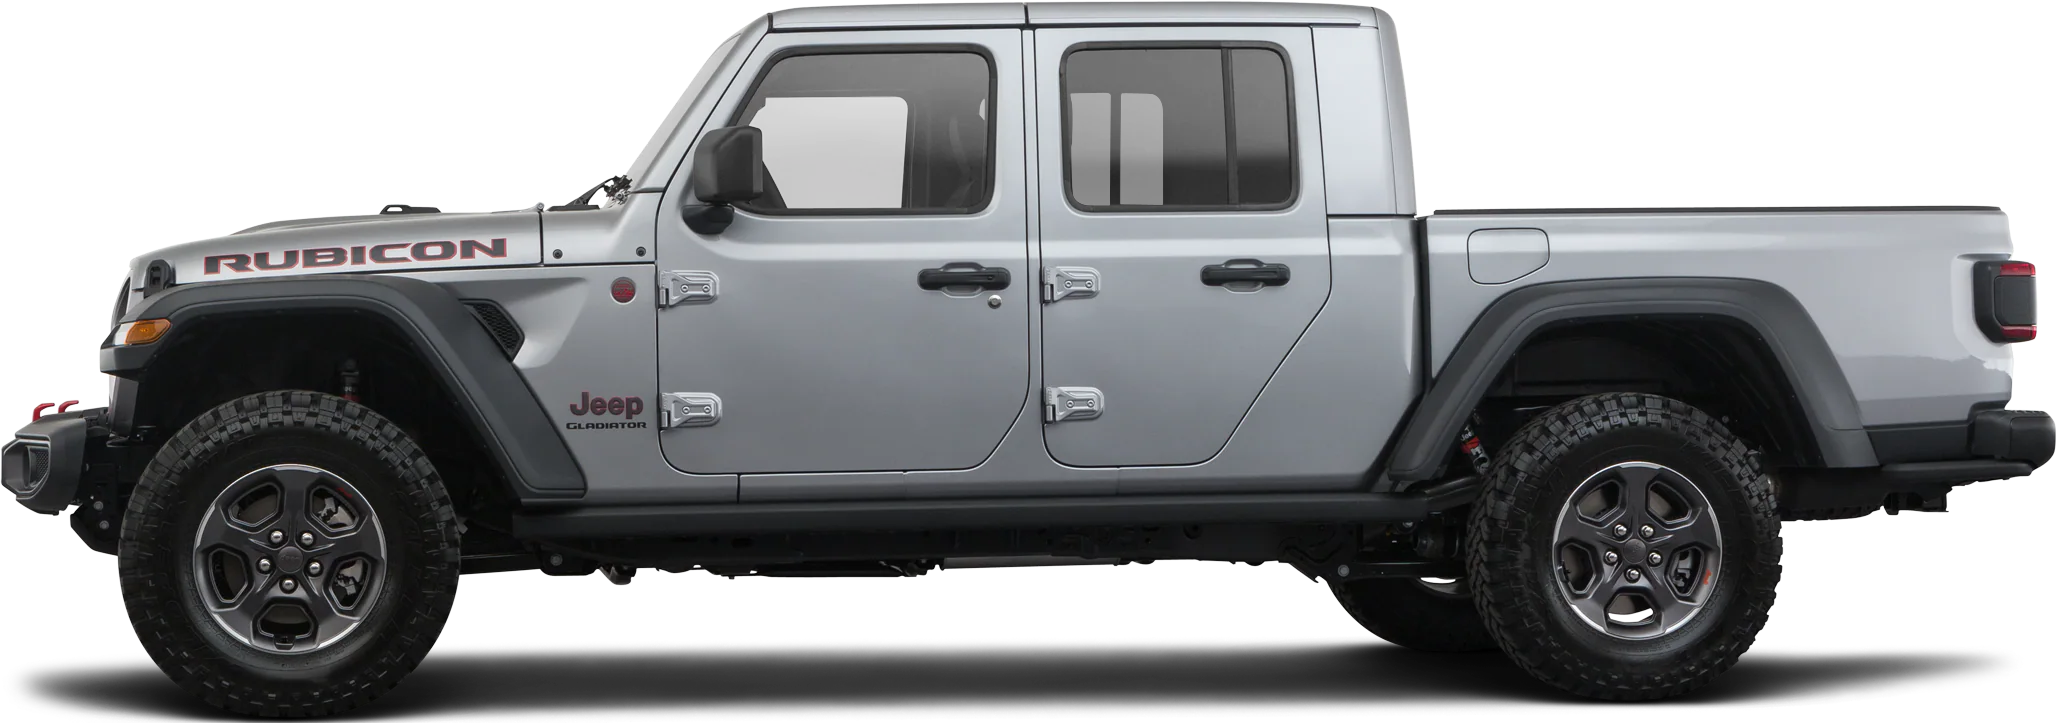 Jeep Gladiator exterior - Side Profile